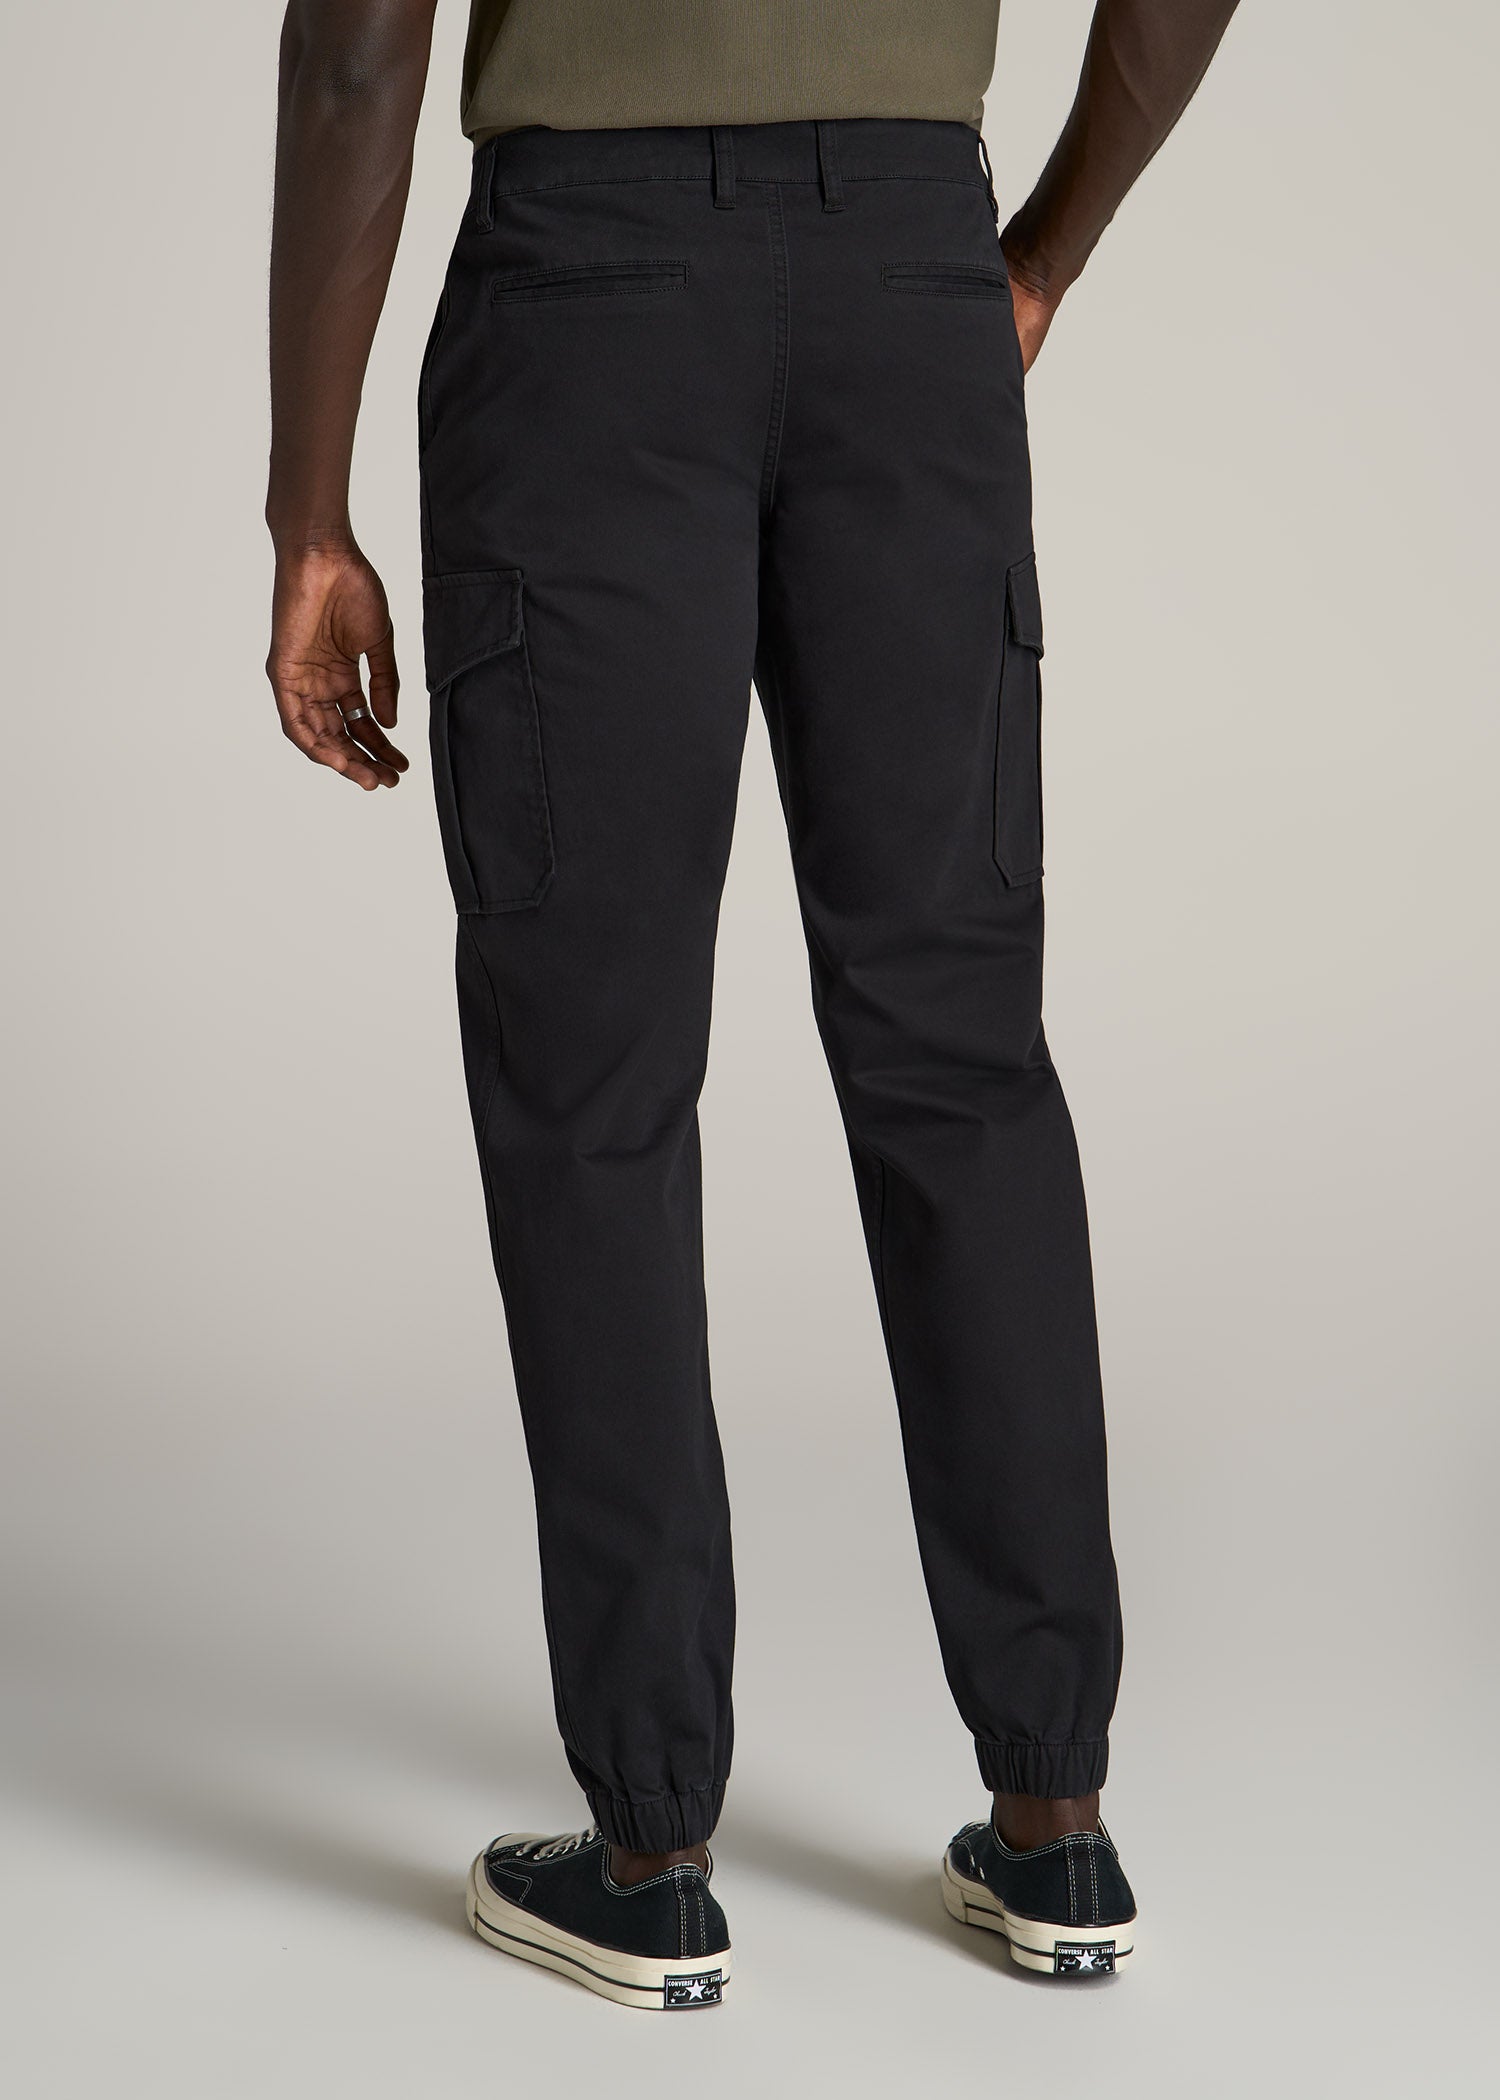 Men's Olive Green, Black Cotton Jogger Track Pants Slim Fit Stretch wi –  Urbano Fashion